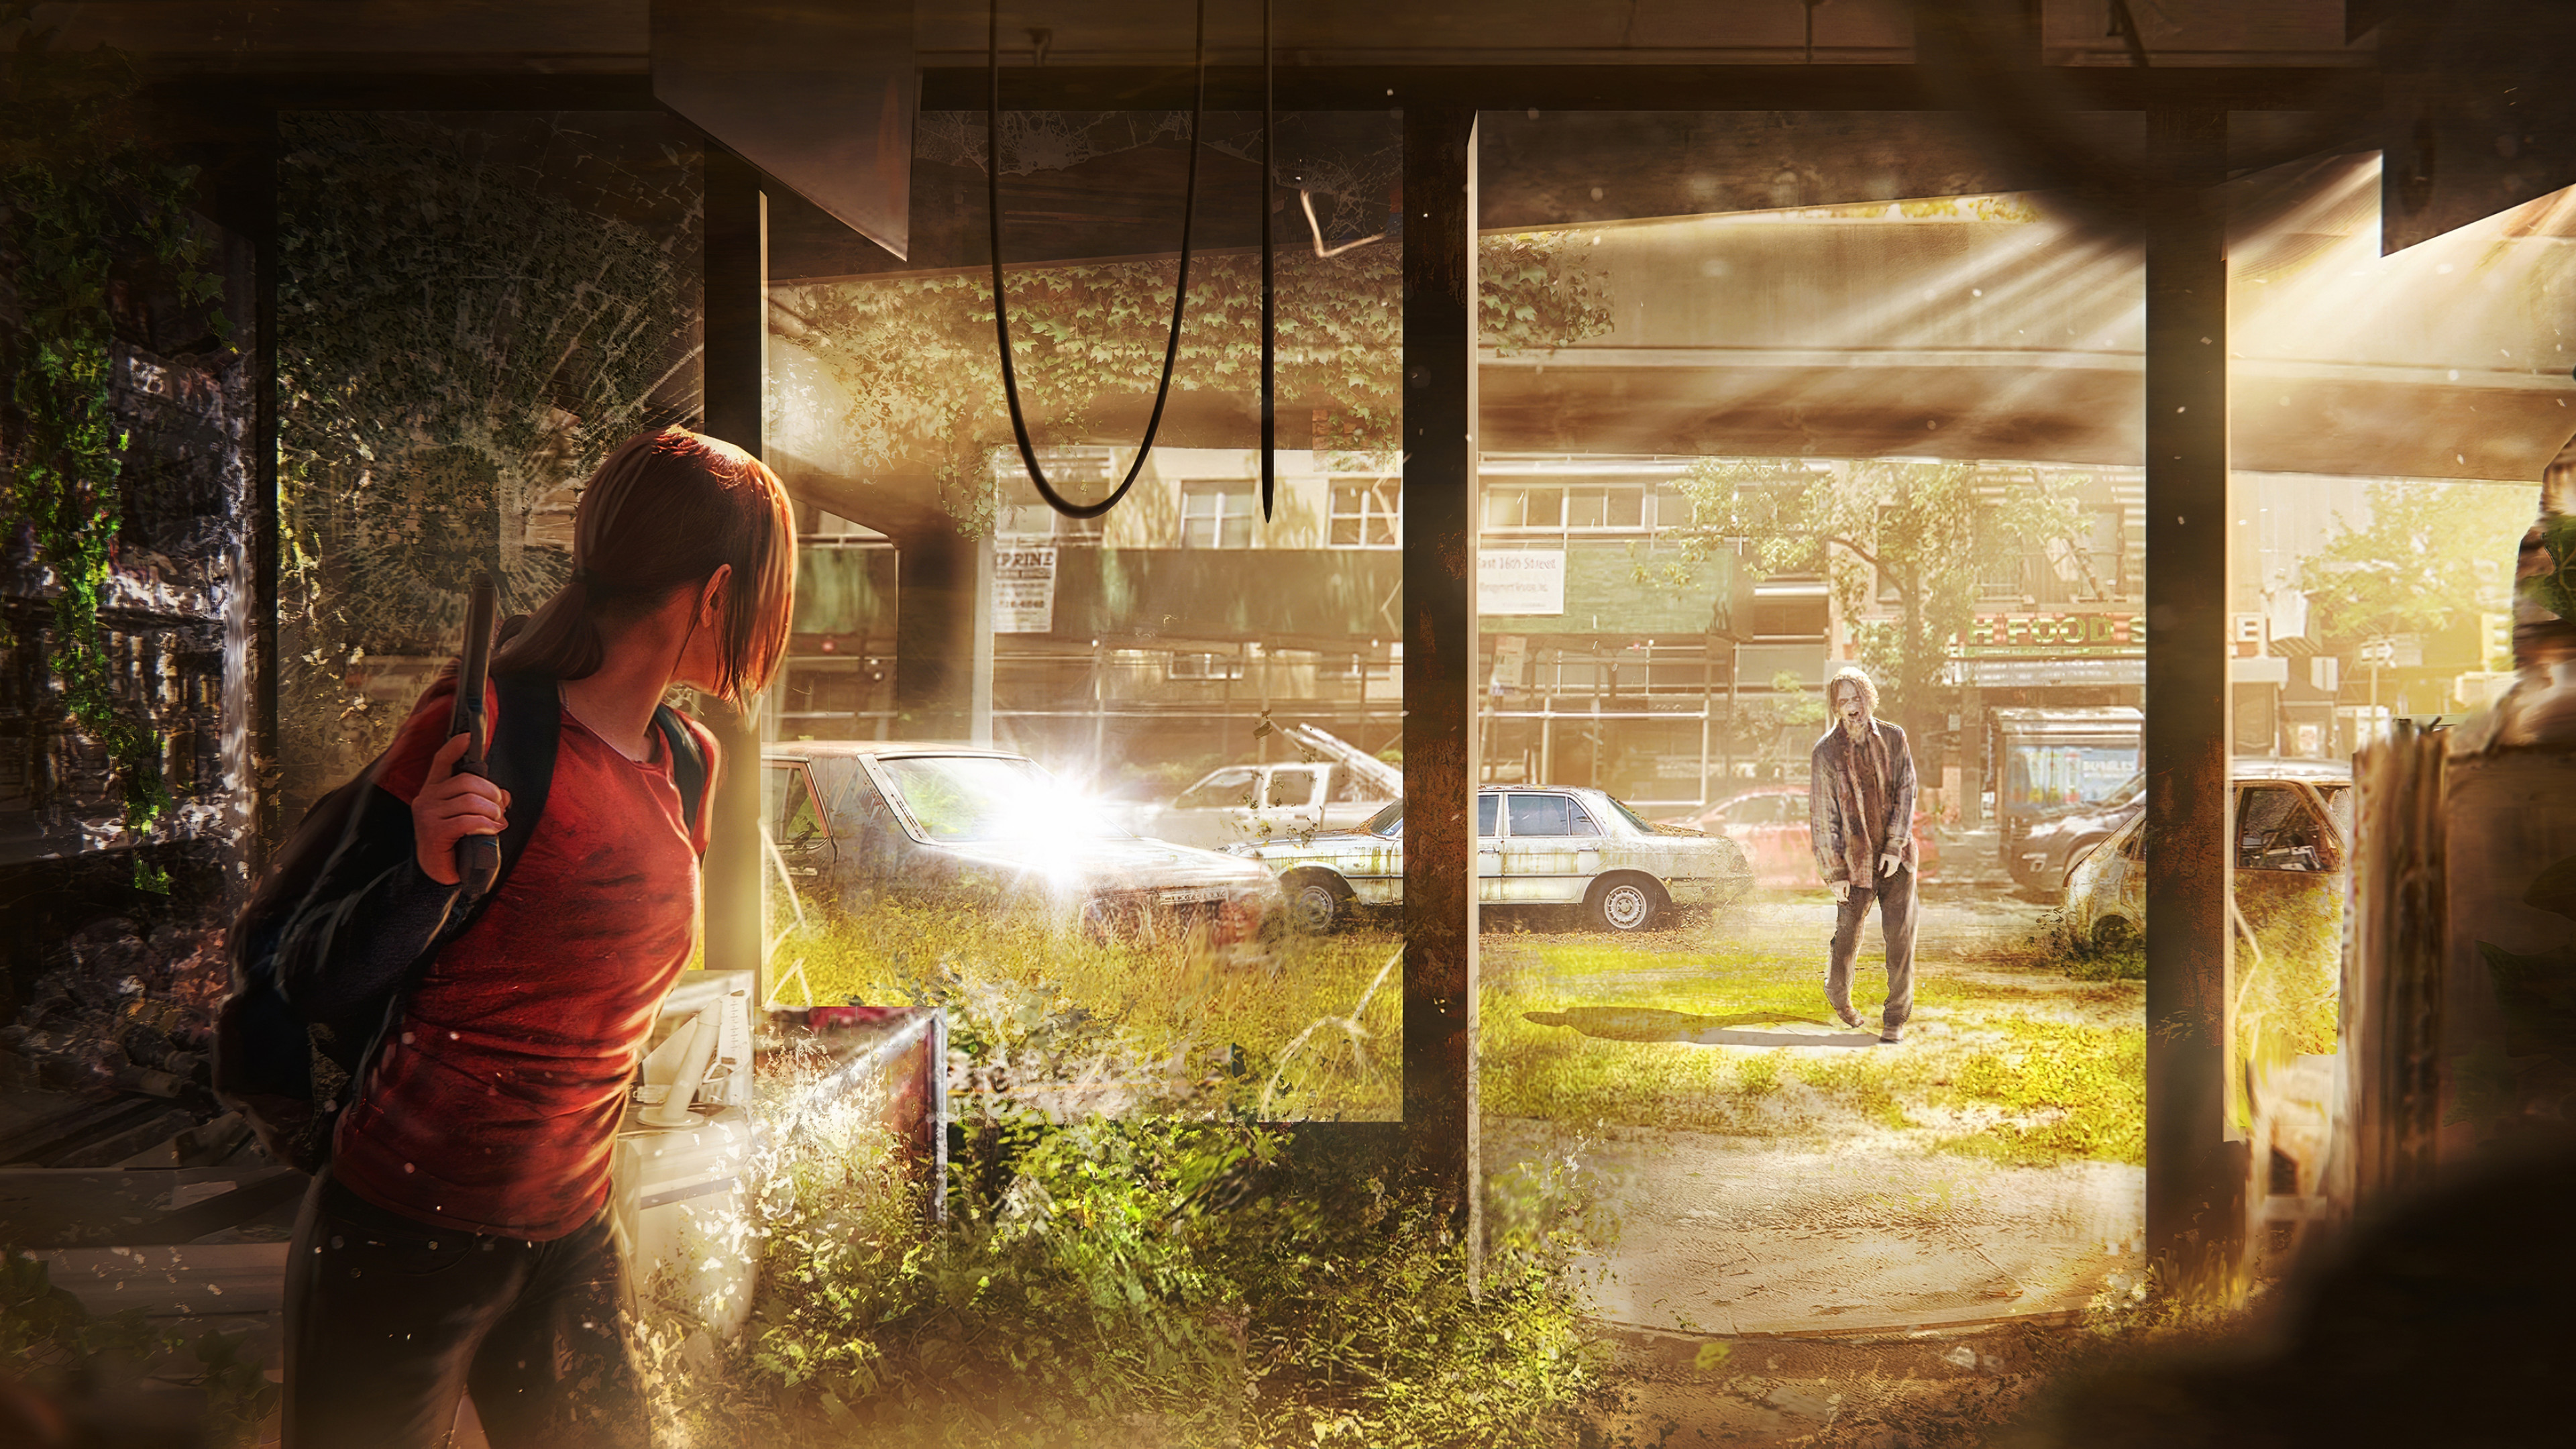 The Last Of Us: Part II HD wallpaper download